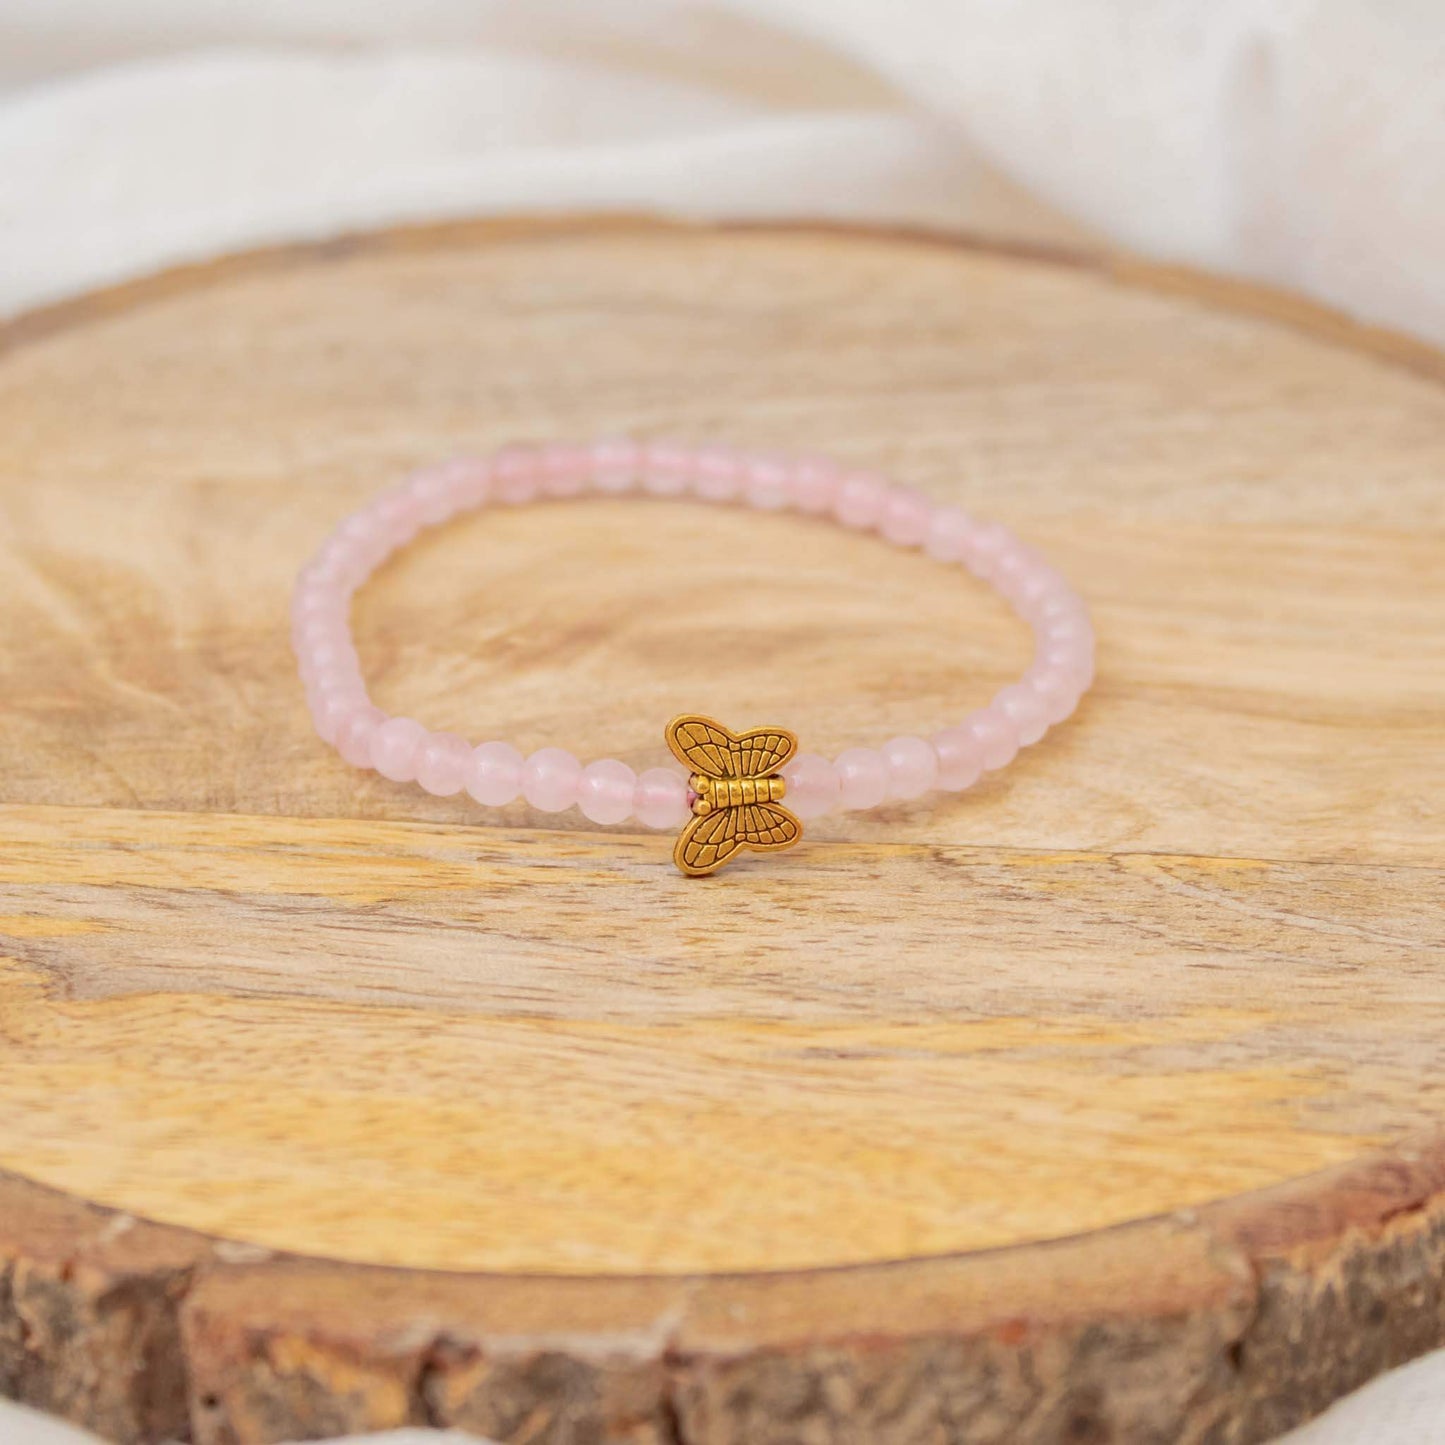 rose quartz 4mm bead bracelet with butterfly charm